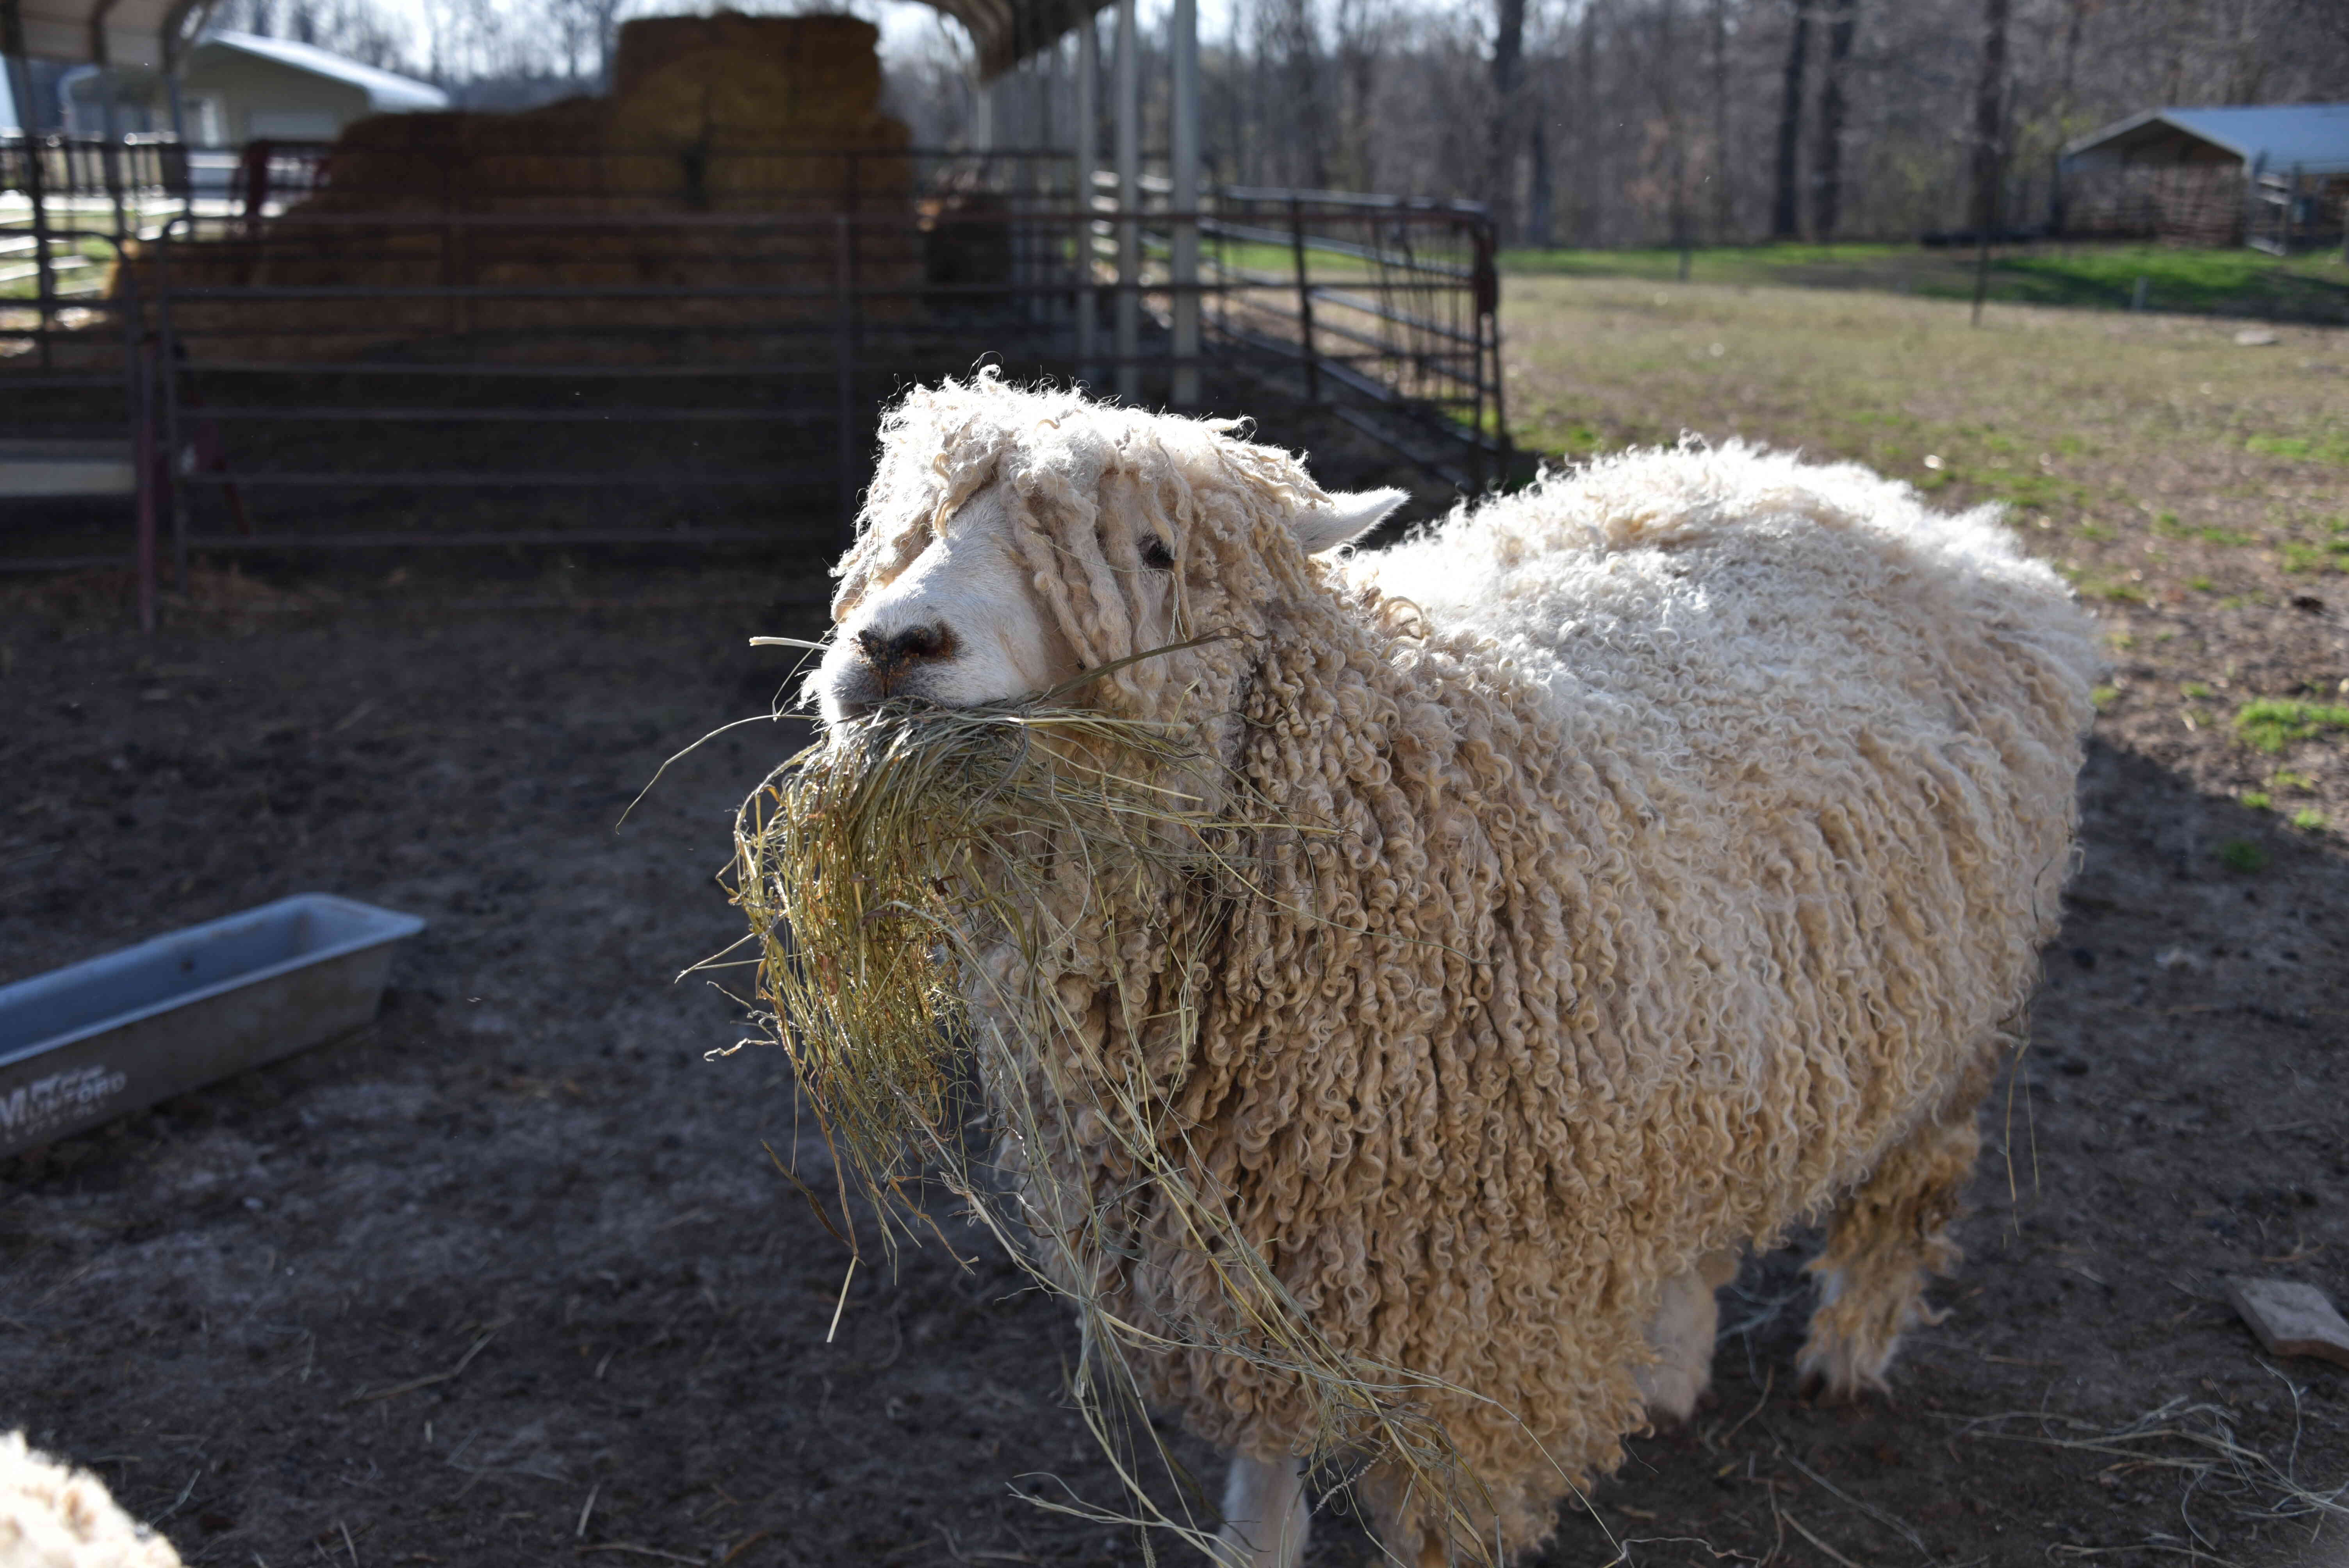 munford livestock sheep 2